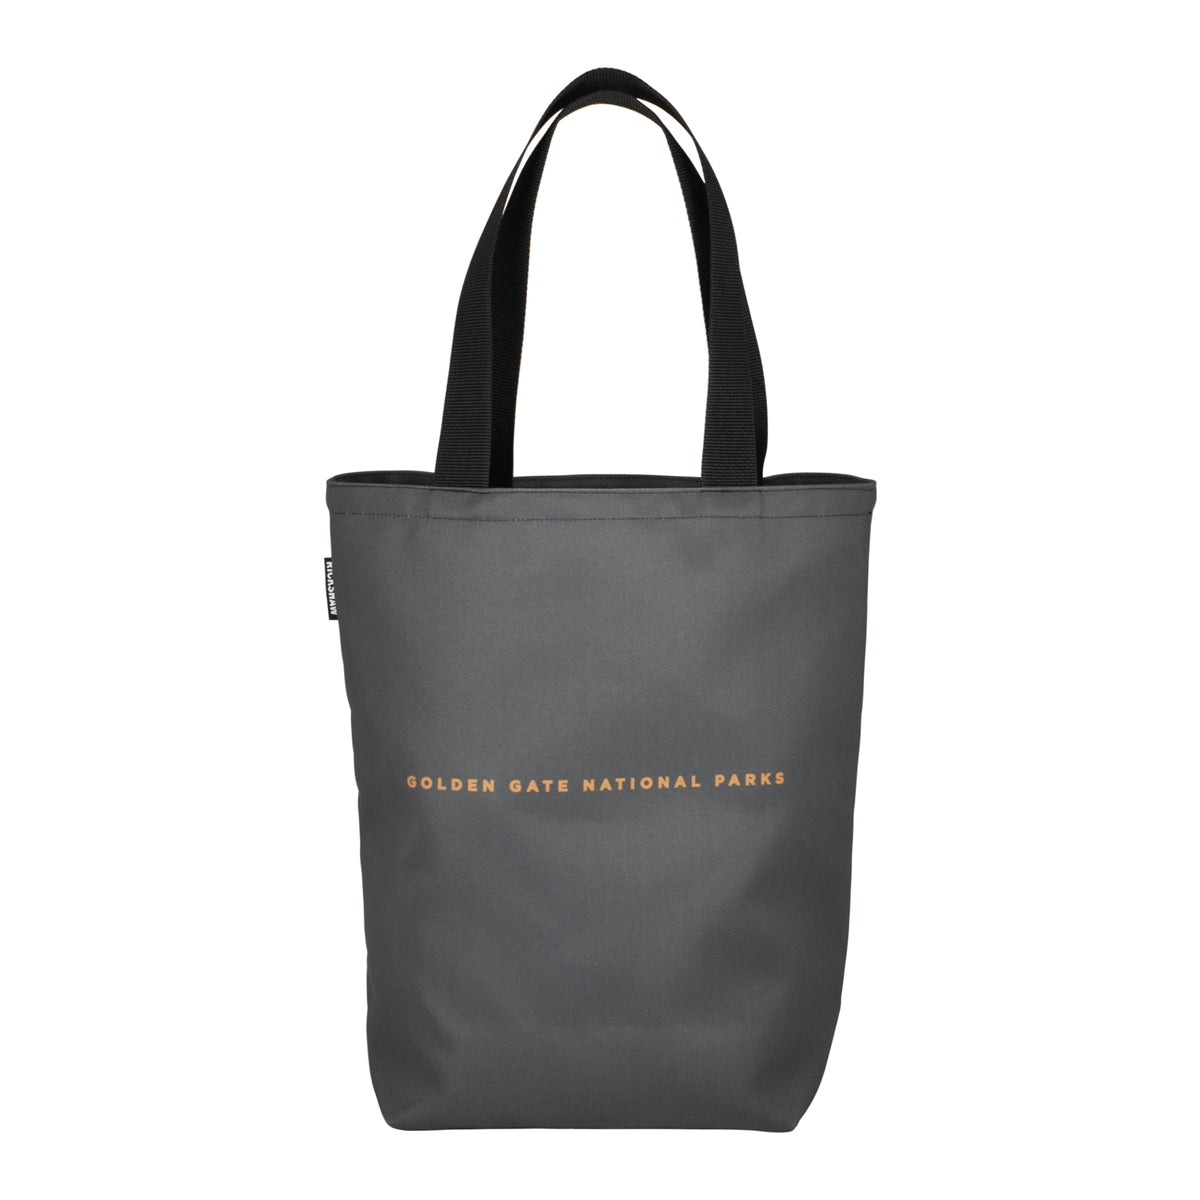 Grey tote bag with black handles, orange text “Golden Gate National Parks” printed at center.